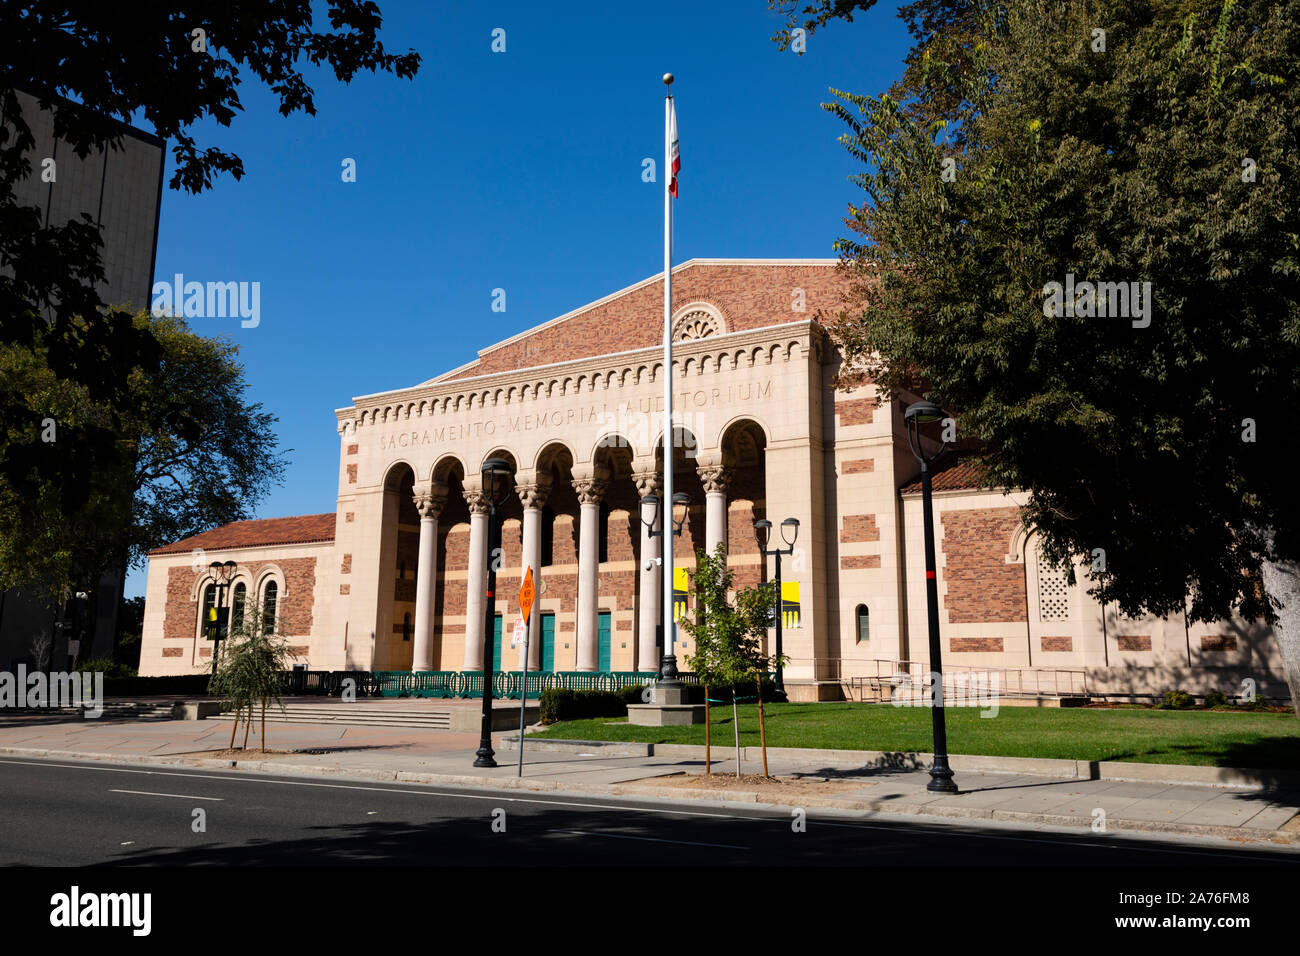 The Sacramento Memorial Auditorium at 1515 J street, Sacramento, State capital of California, United States of America. Stock Photo